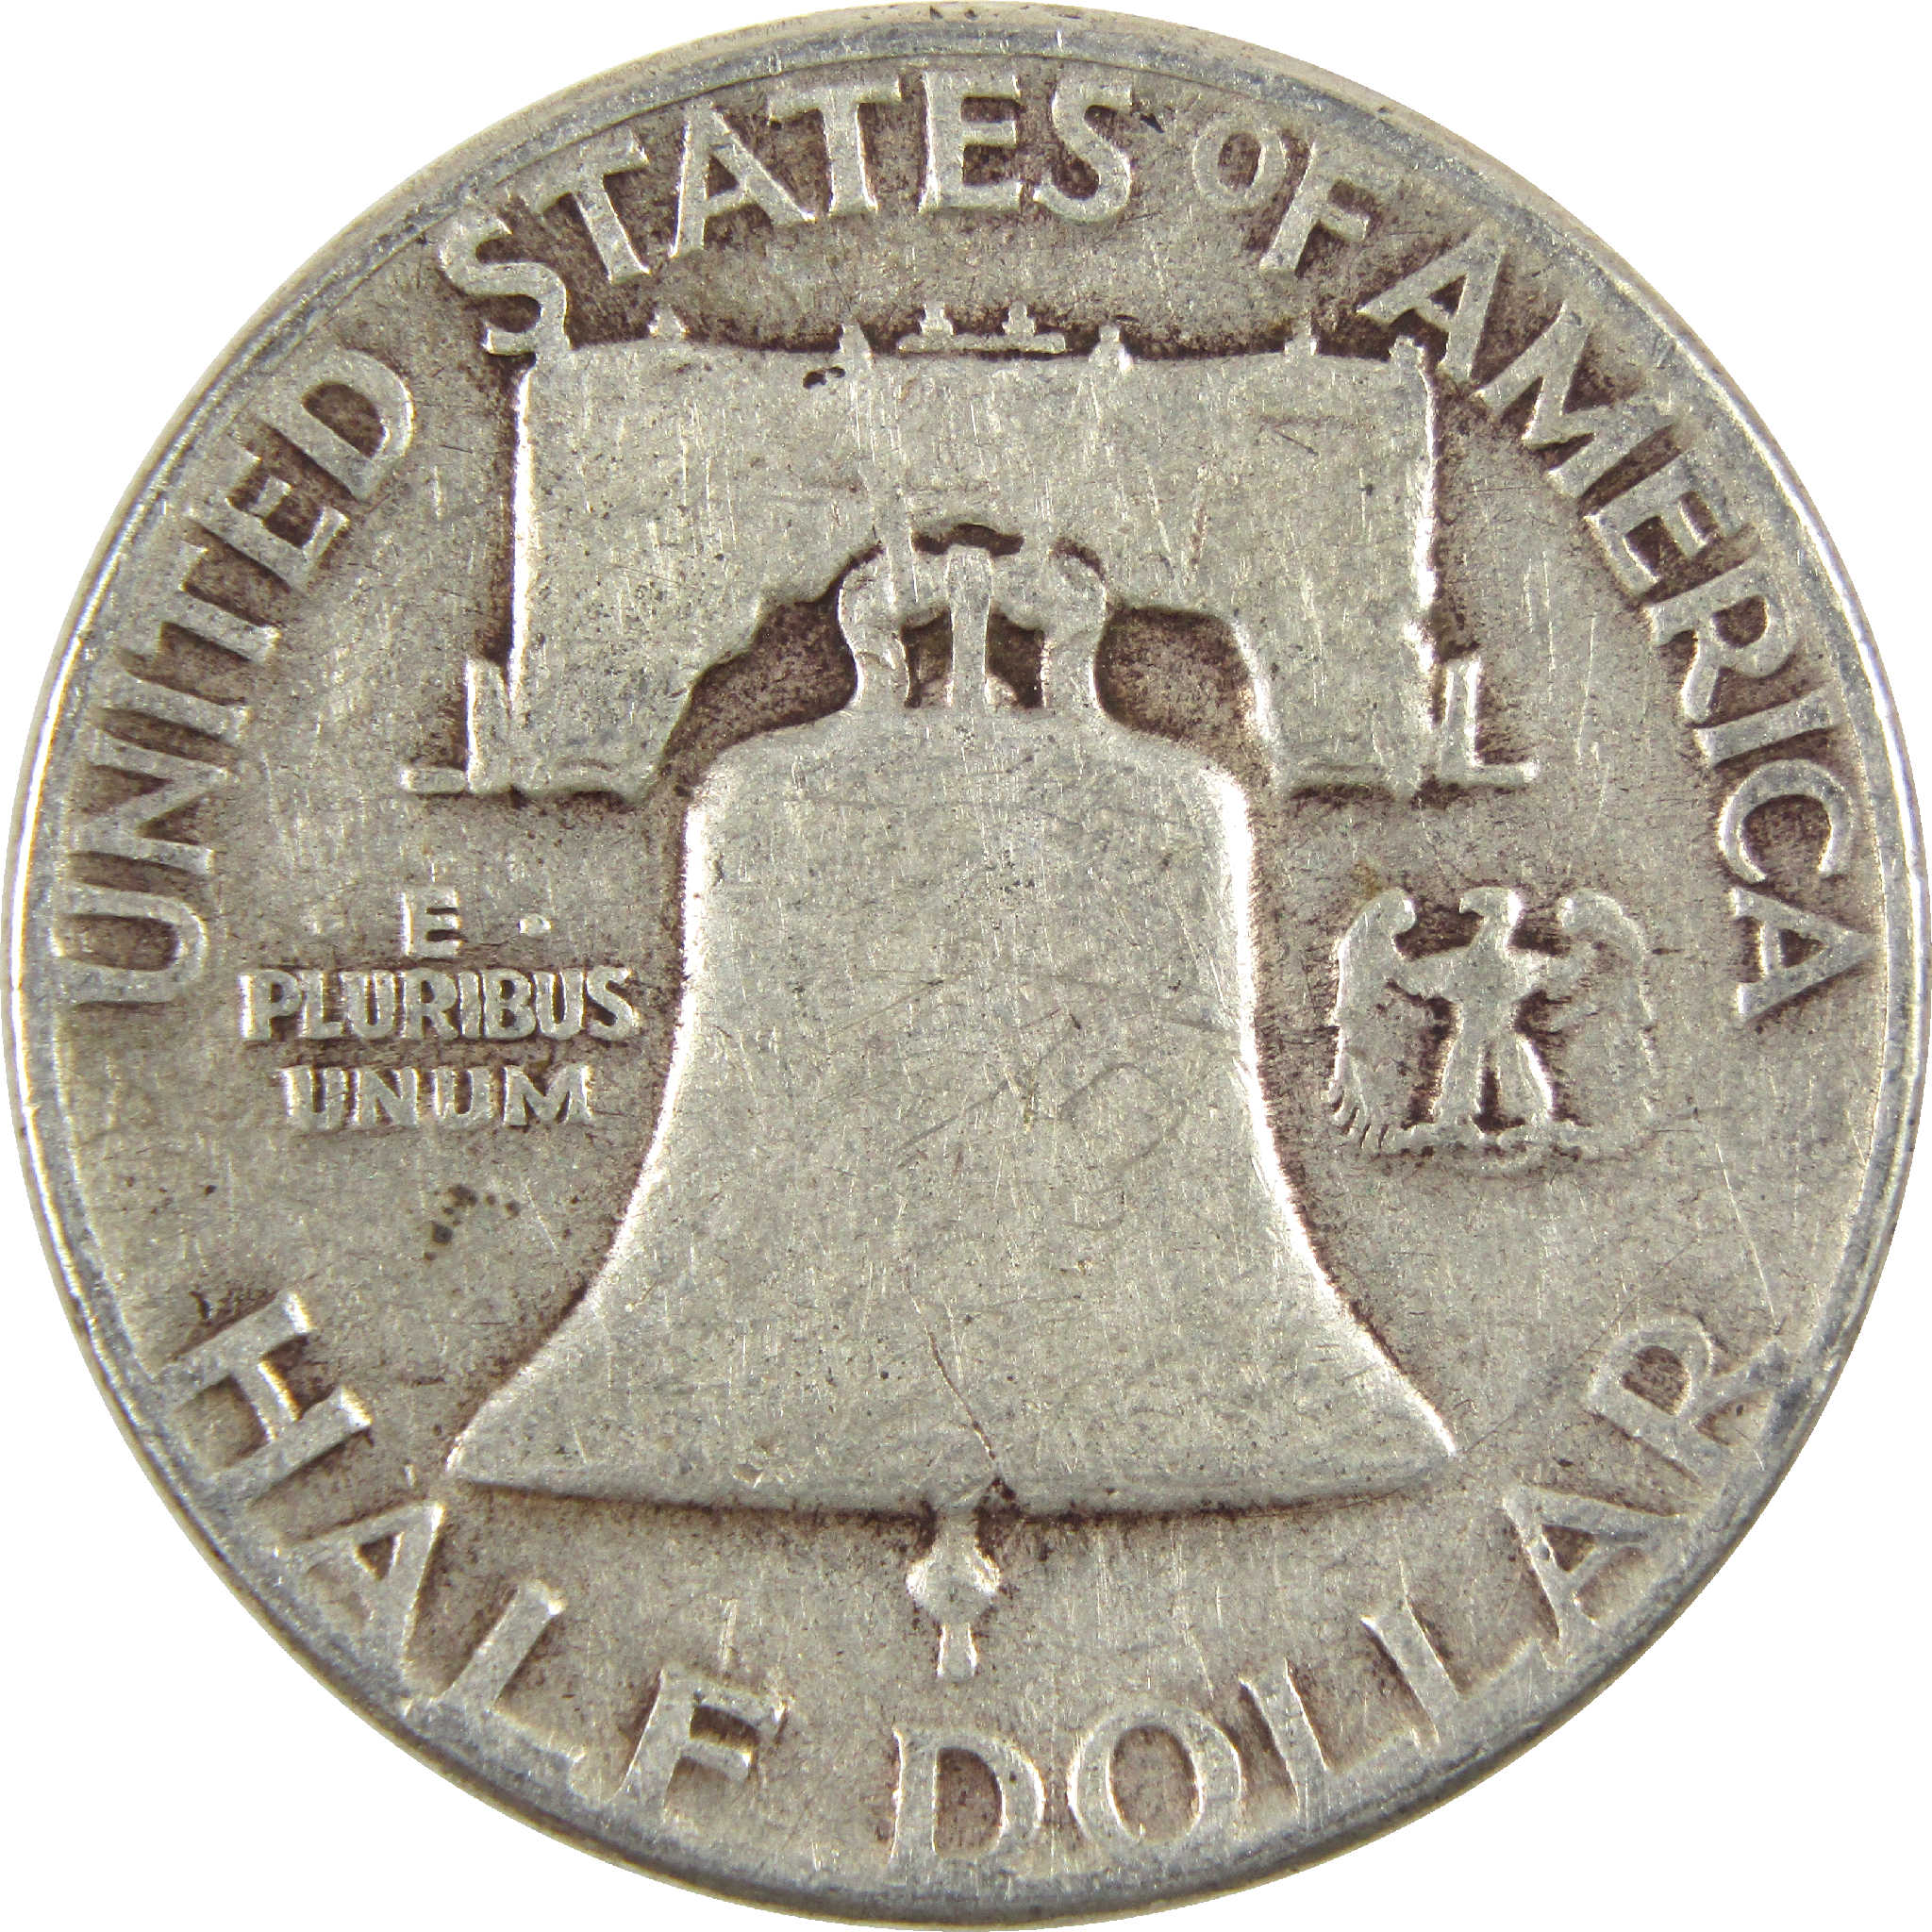 1952 Franklin Half Dollar VG Very Good Silver 50c Coin